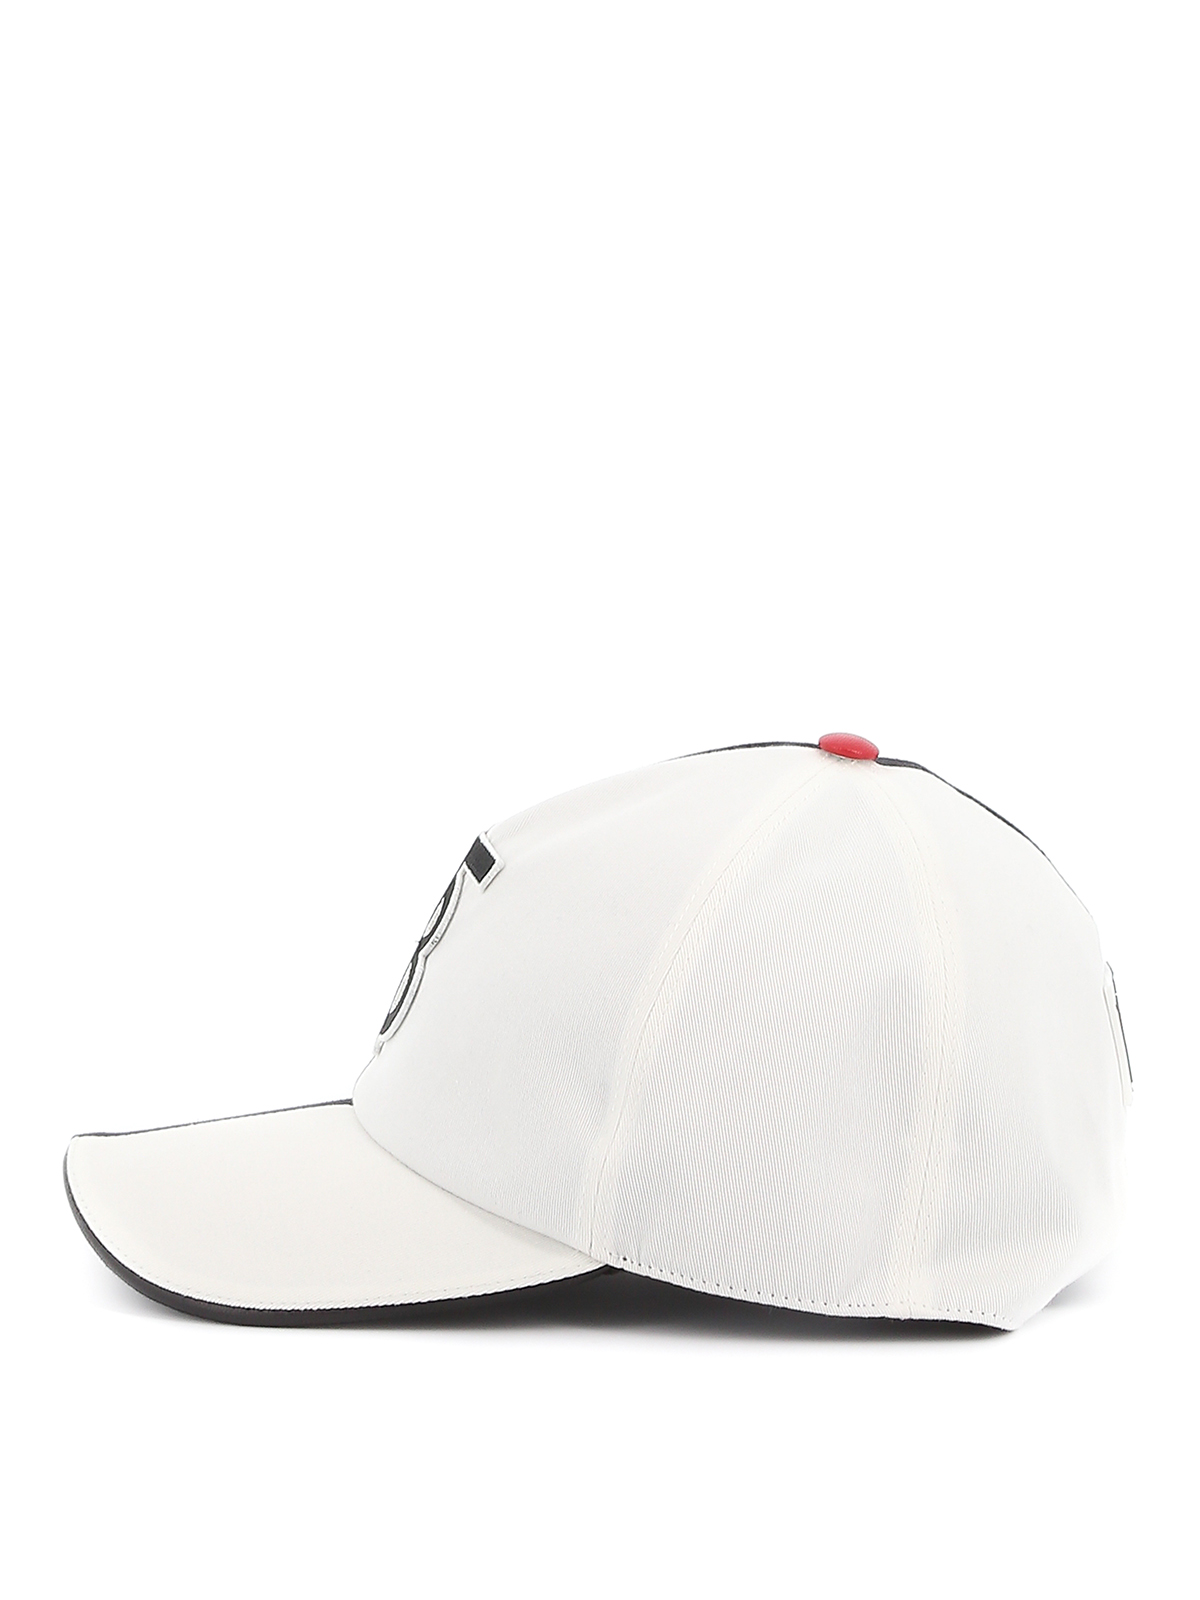 Hats & caps Burberry - Trucker baseball cap - 8023974 